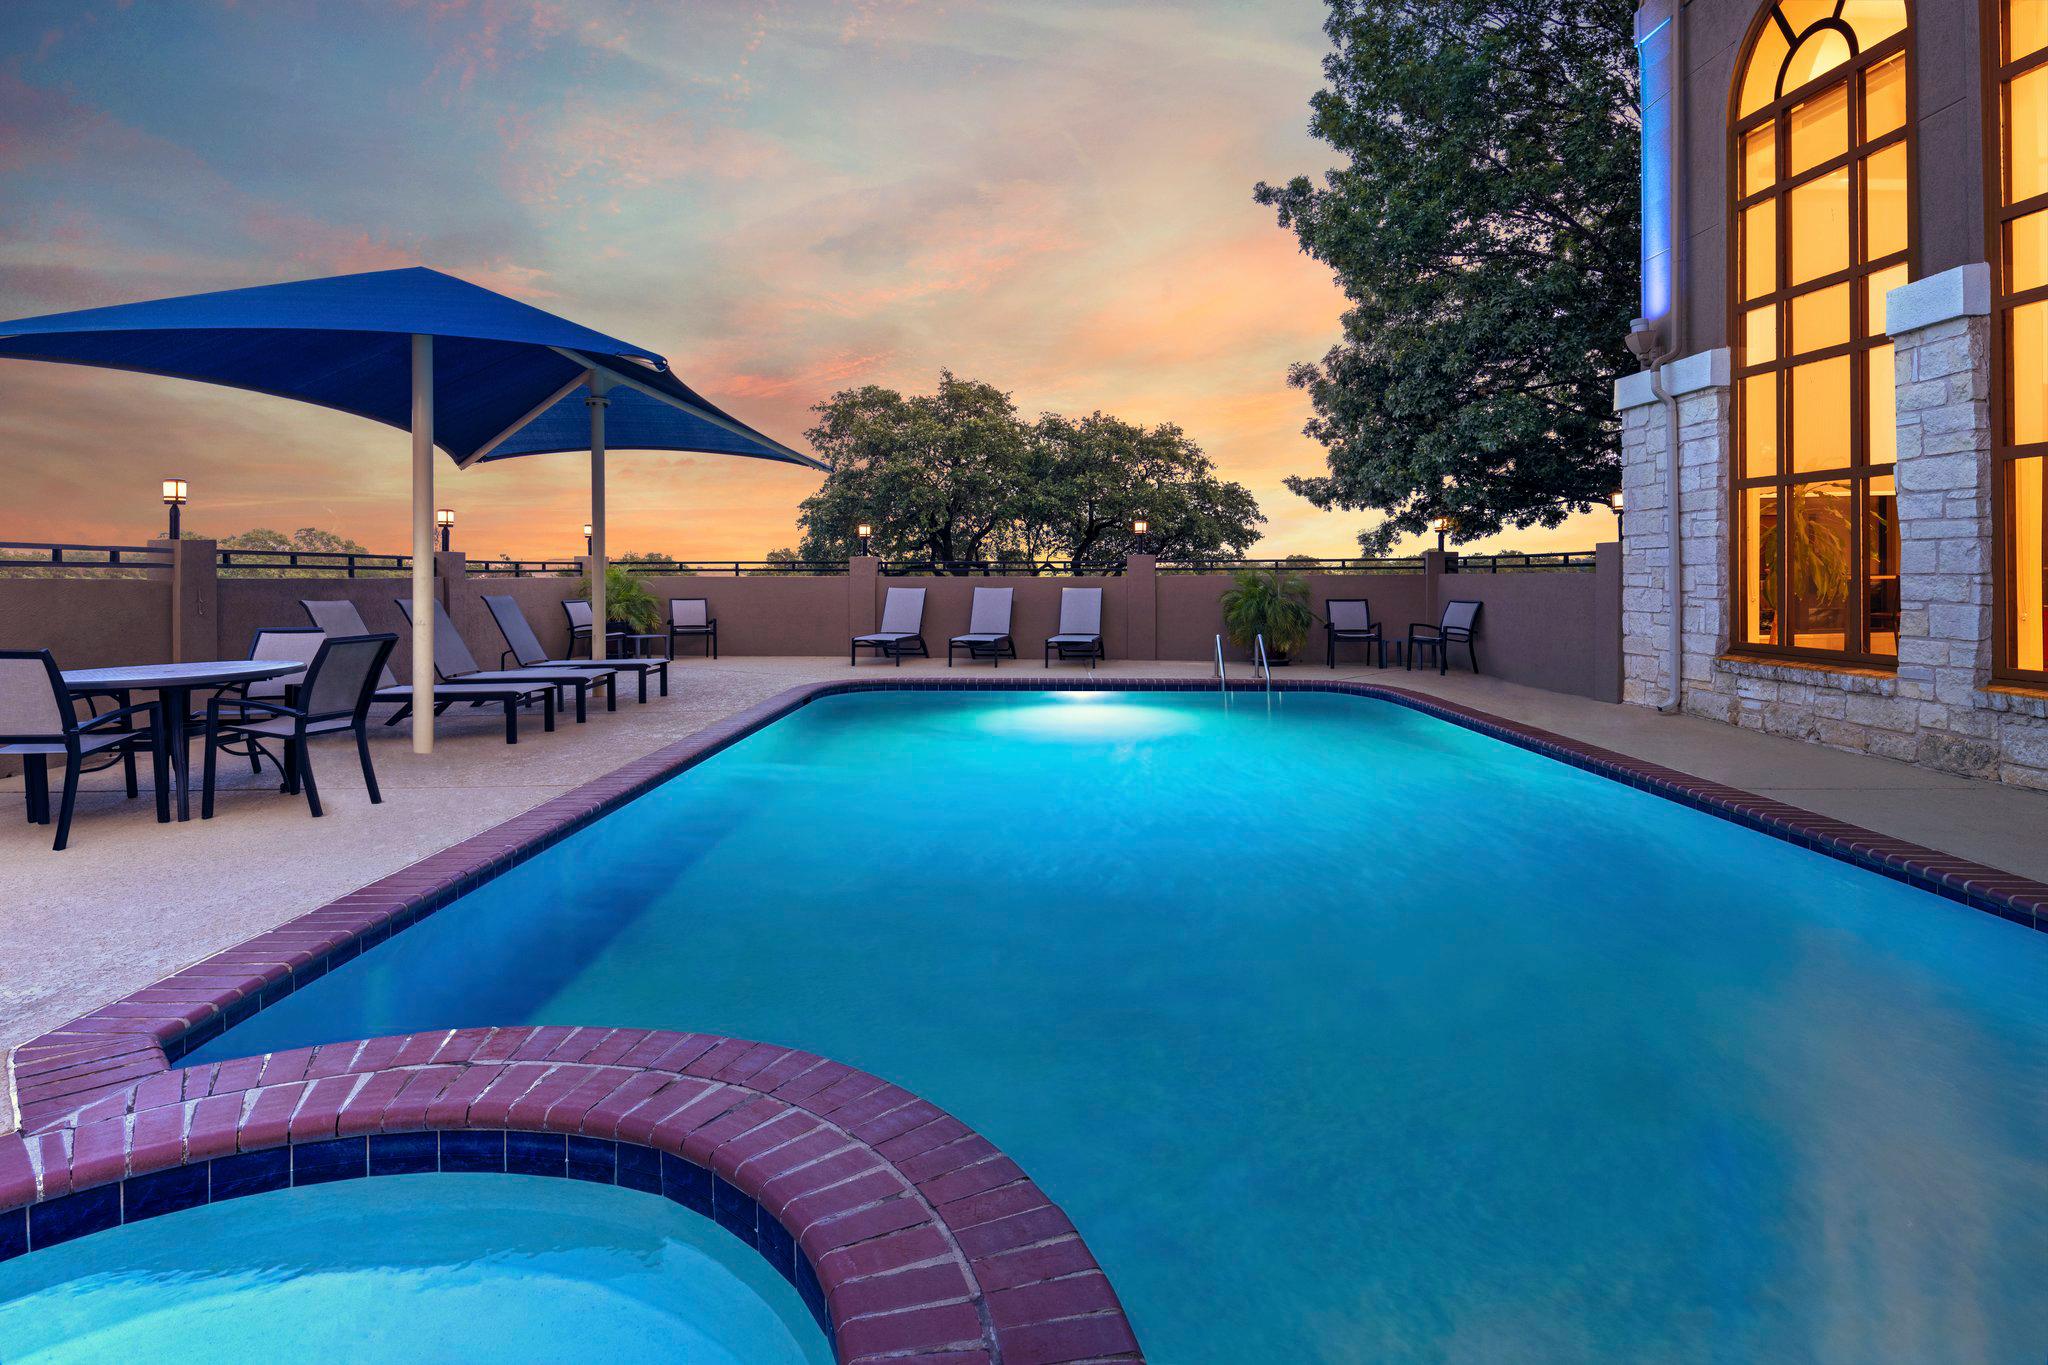 Holiday Inn Express & Suites Cedar Park (NW Austin) Photo